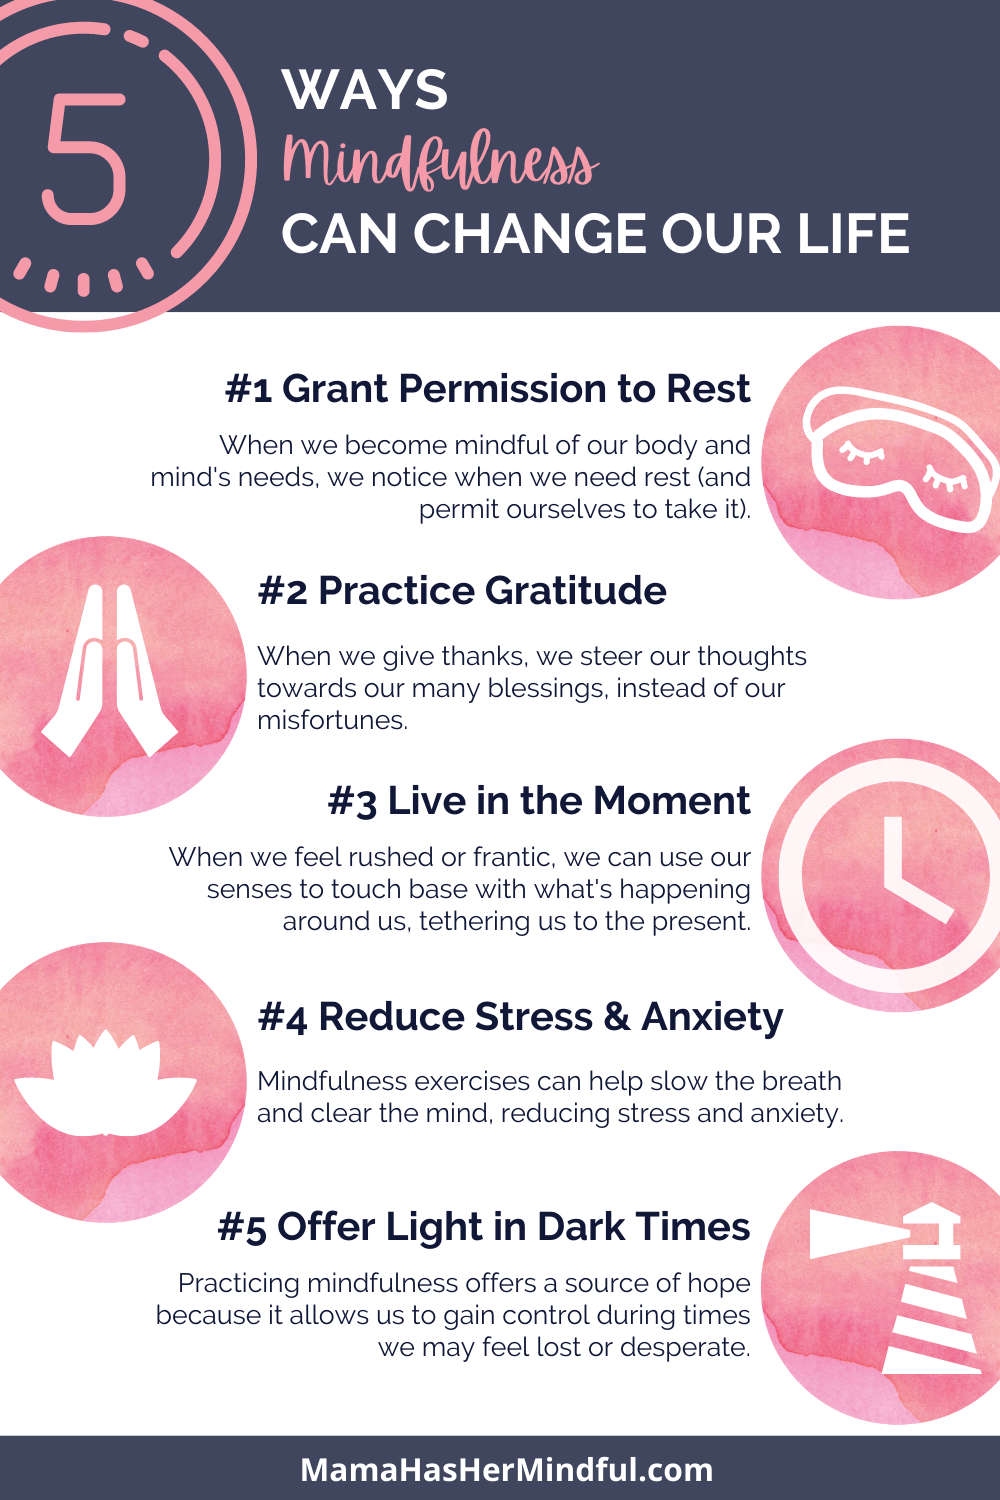 5 Awe-inspiring Ways Practicing Mindfulness Changed My Life